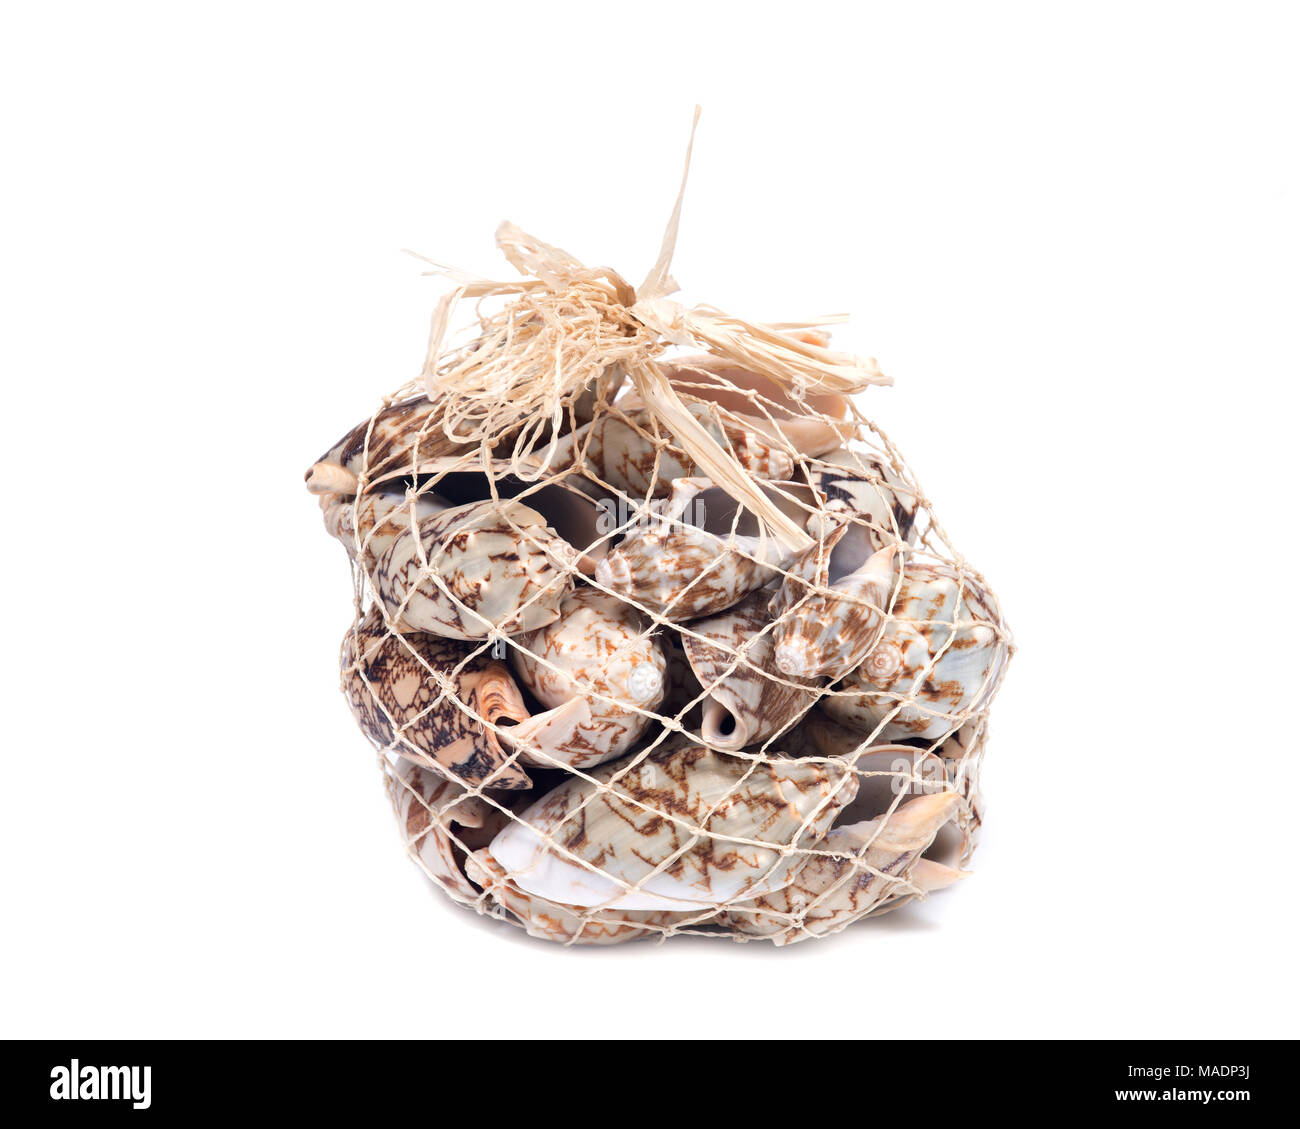 Decorative bag of bat volute sea shell, cymbiola vespertilio, volutidae family, isolated on white bacground Stock Photo